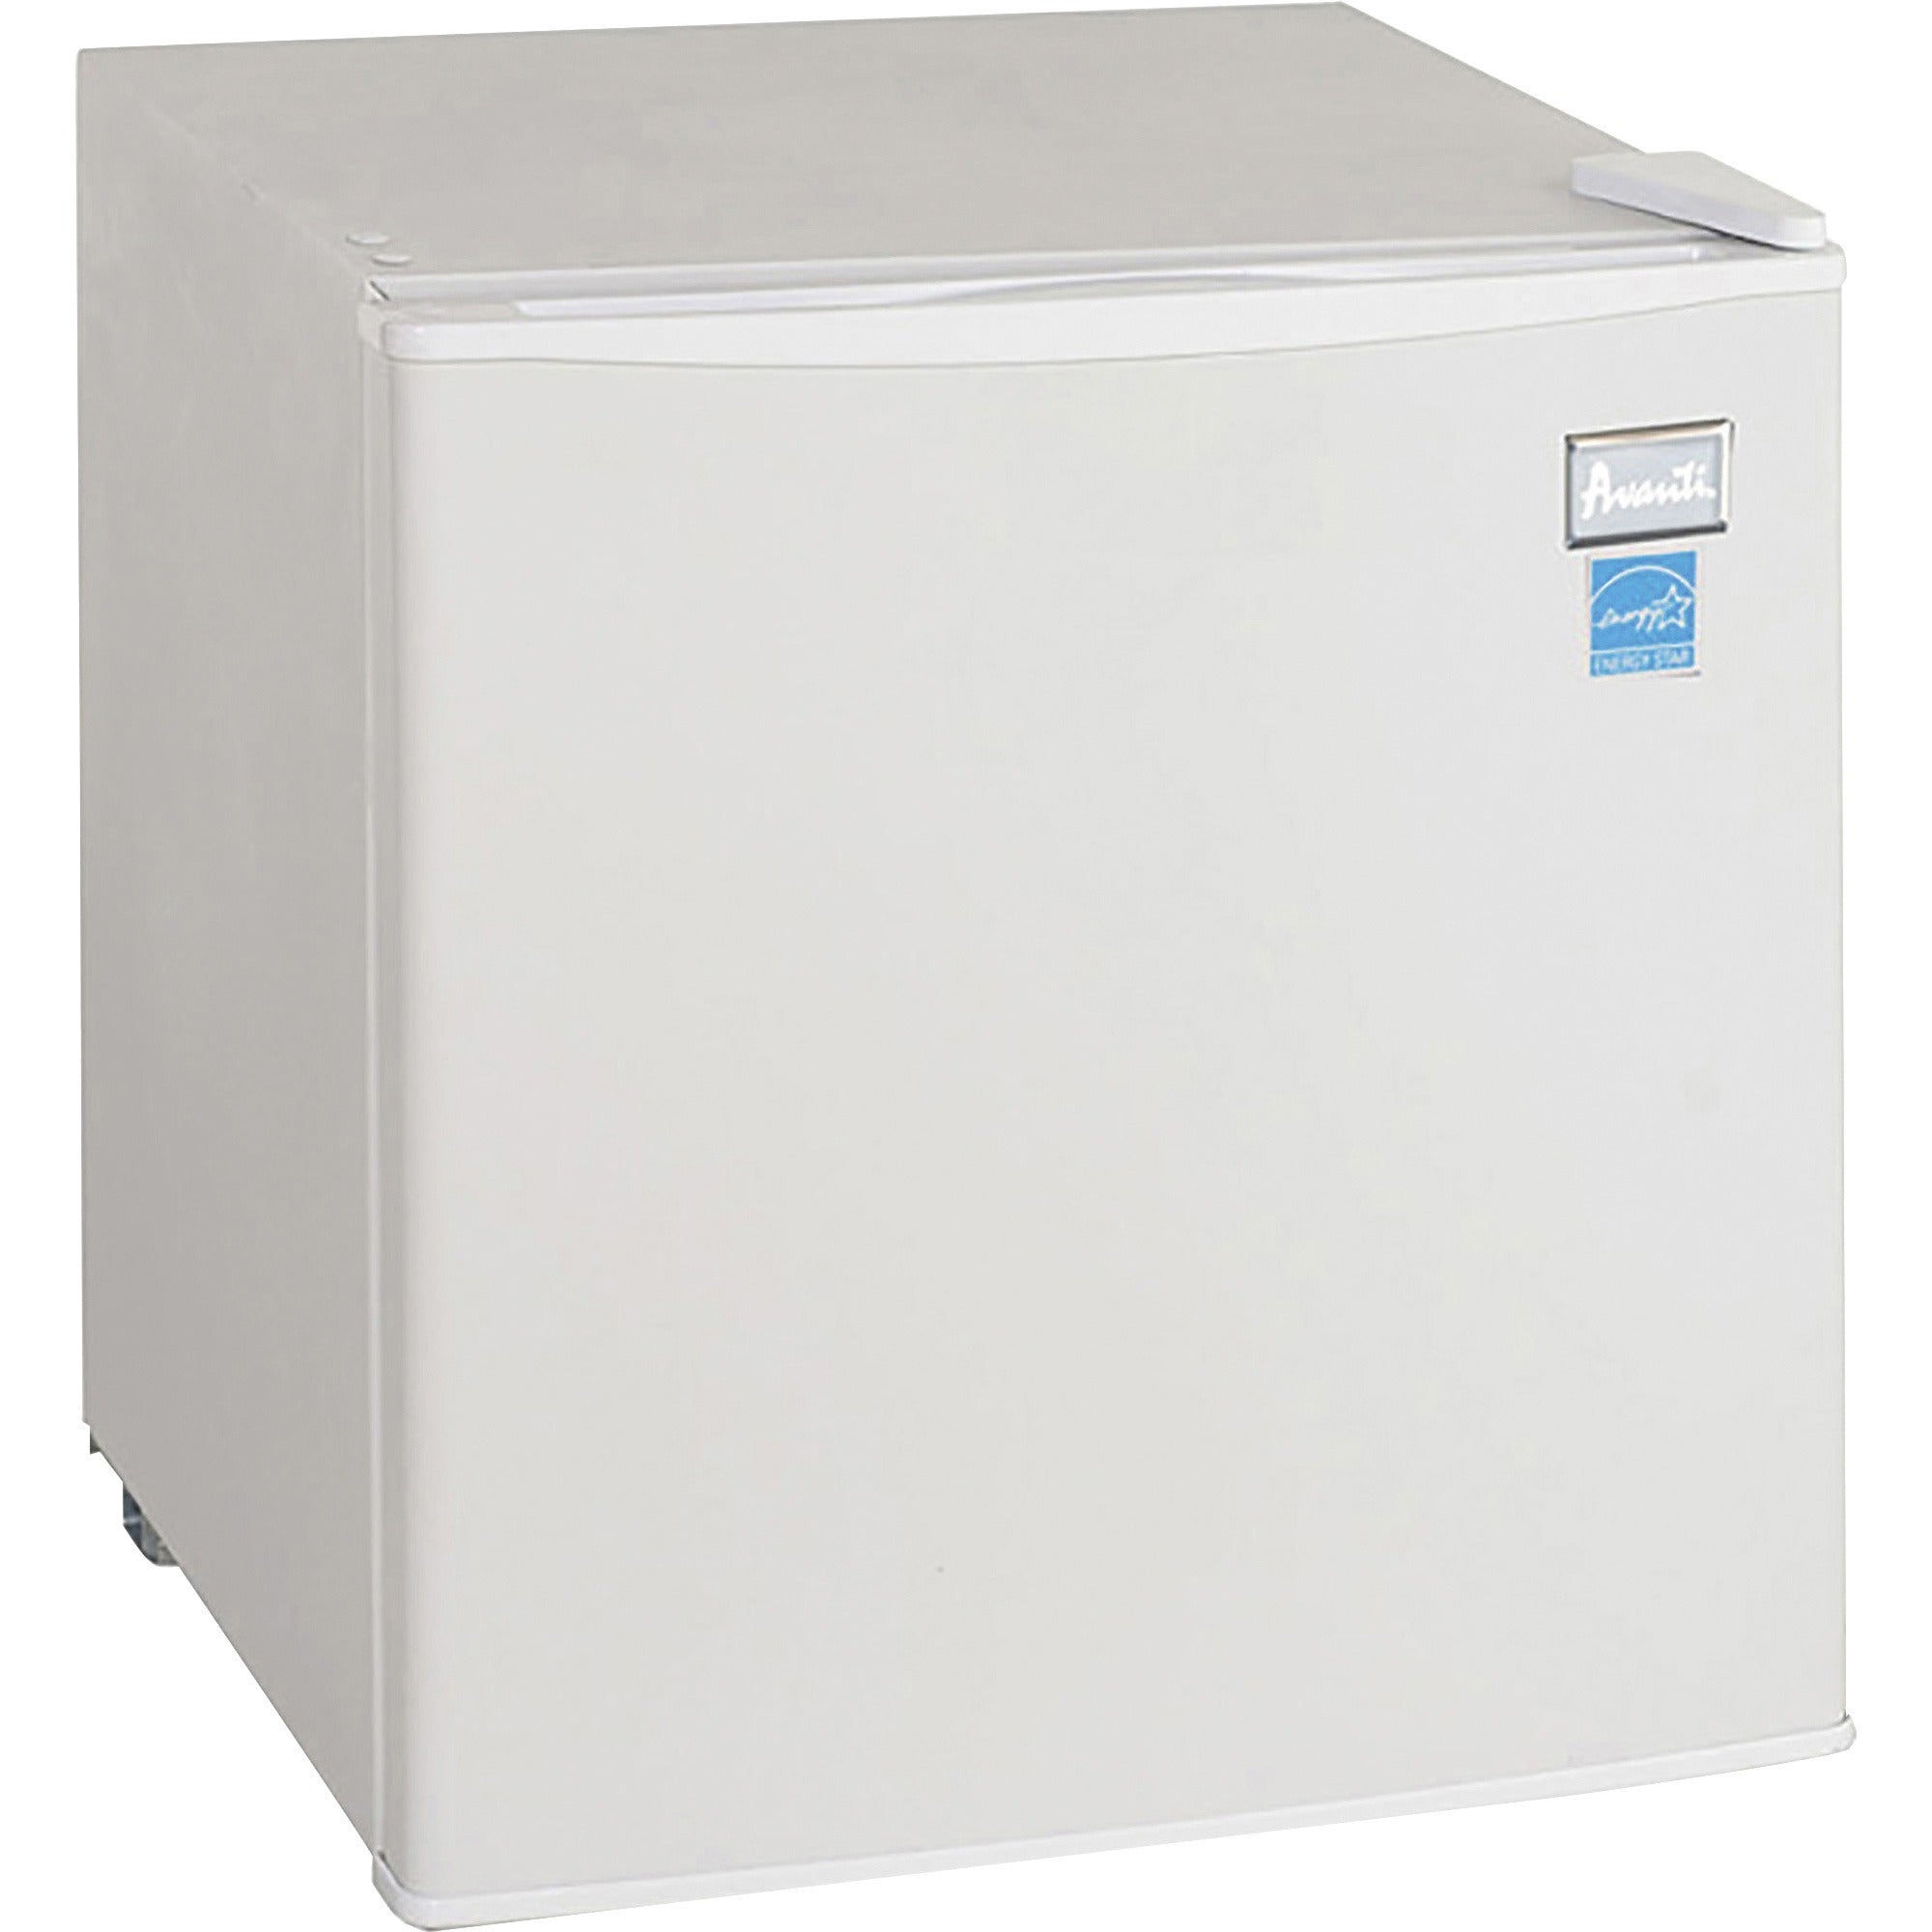 avanti-17-cubic-foot-refrigerator-170-ft-auto-defrost-undercounter-reversible-170-ft-net-refrigerator-capacity-120-v-ac-233-kwh-per-year-freestanding_avaar17t0w - 1